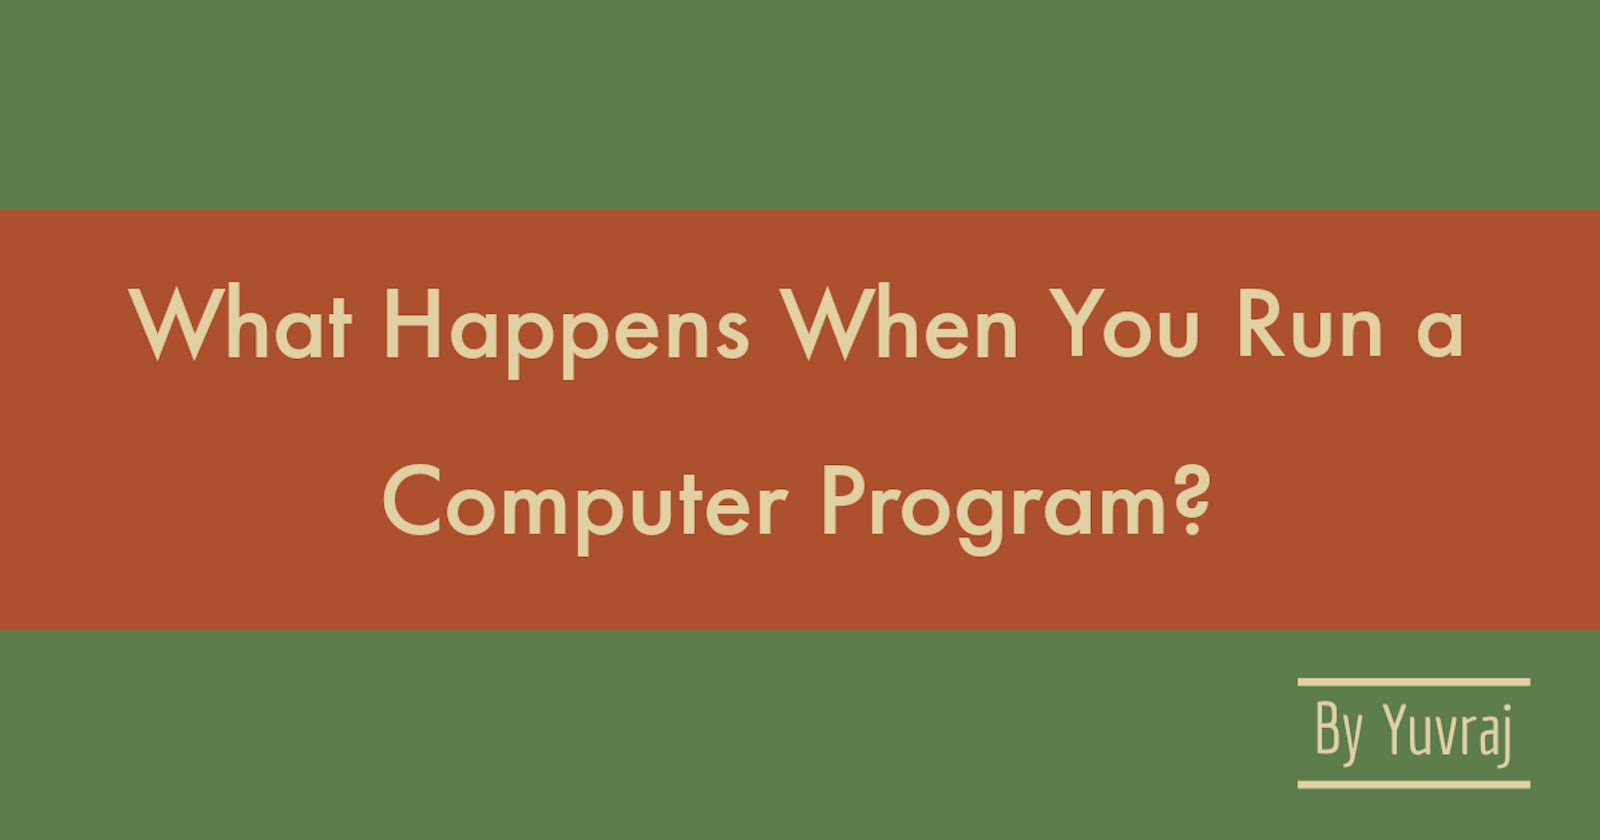 What Happens When You Run a Computer Program